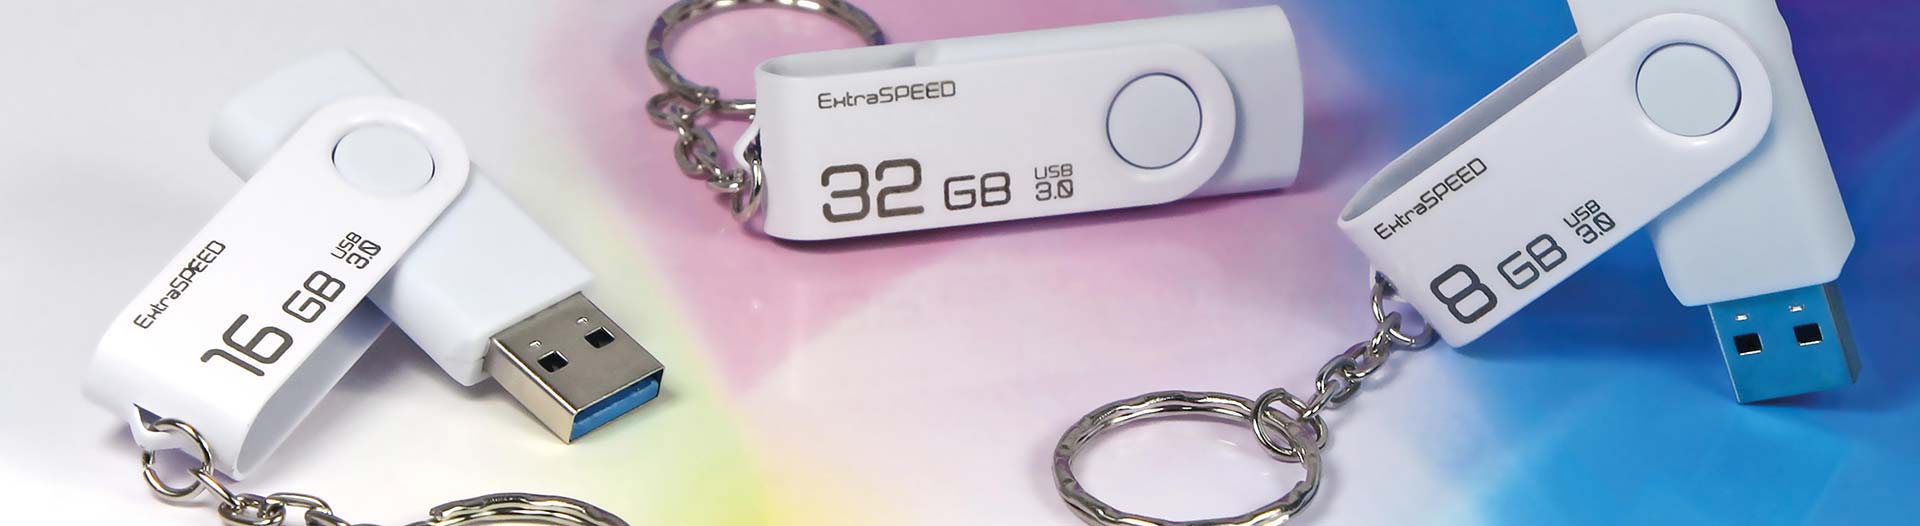 USB-Stick Extra Speed